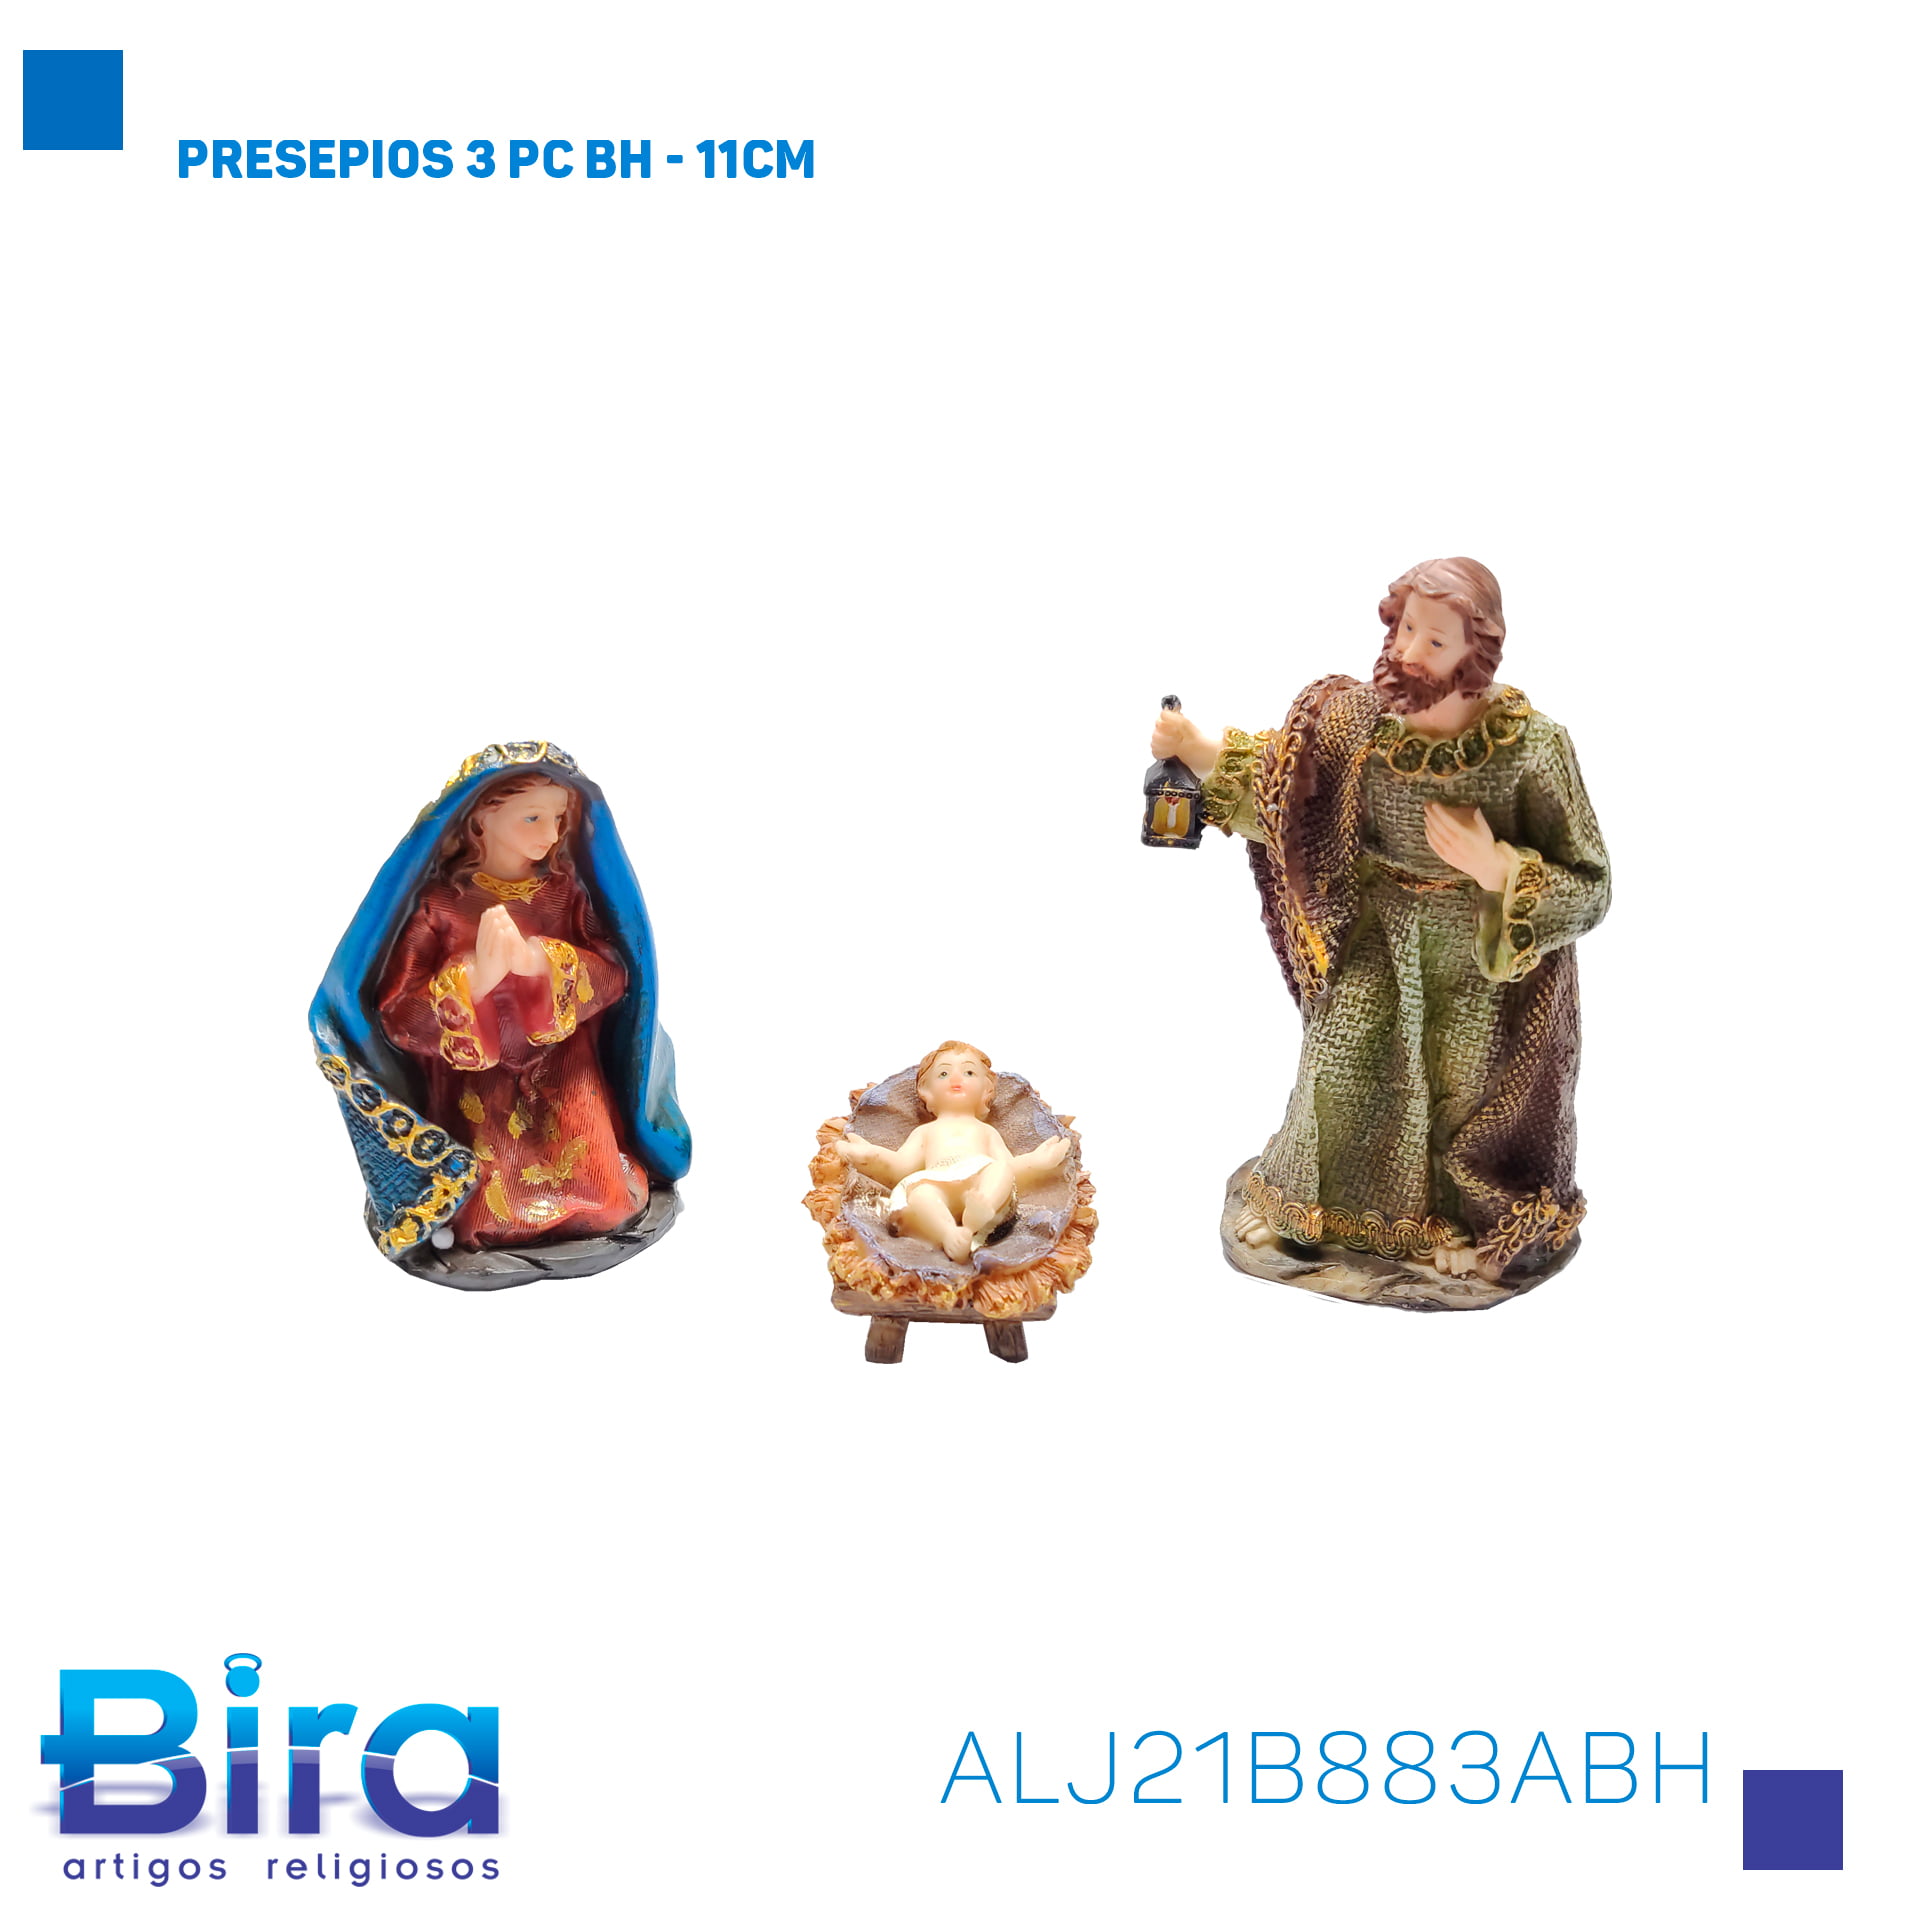 Bira Artigos Religiosos - PRESEPIOS 3 PC BH  11CM - Cód. ALJ21B883ABH